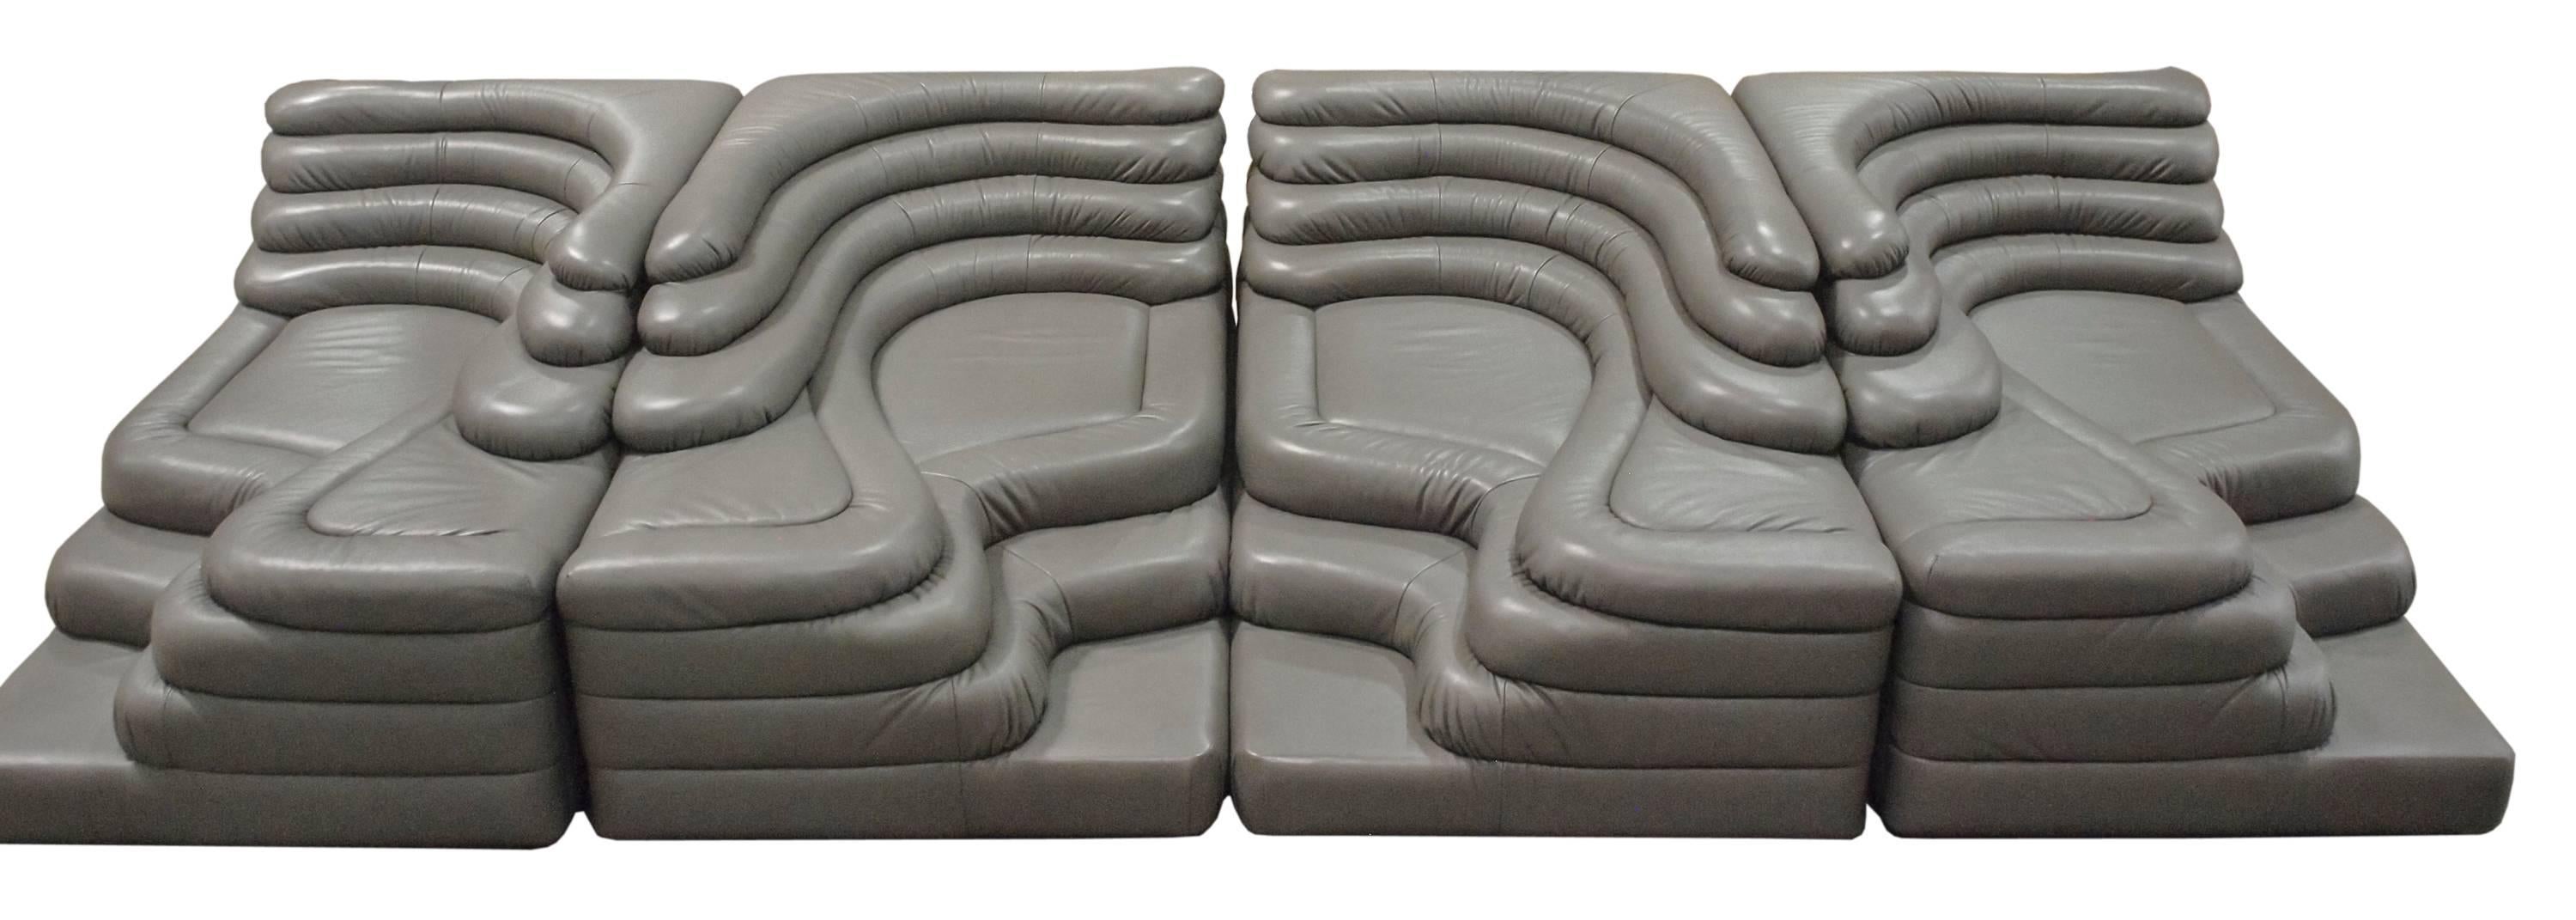 ds-1025 sofa price